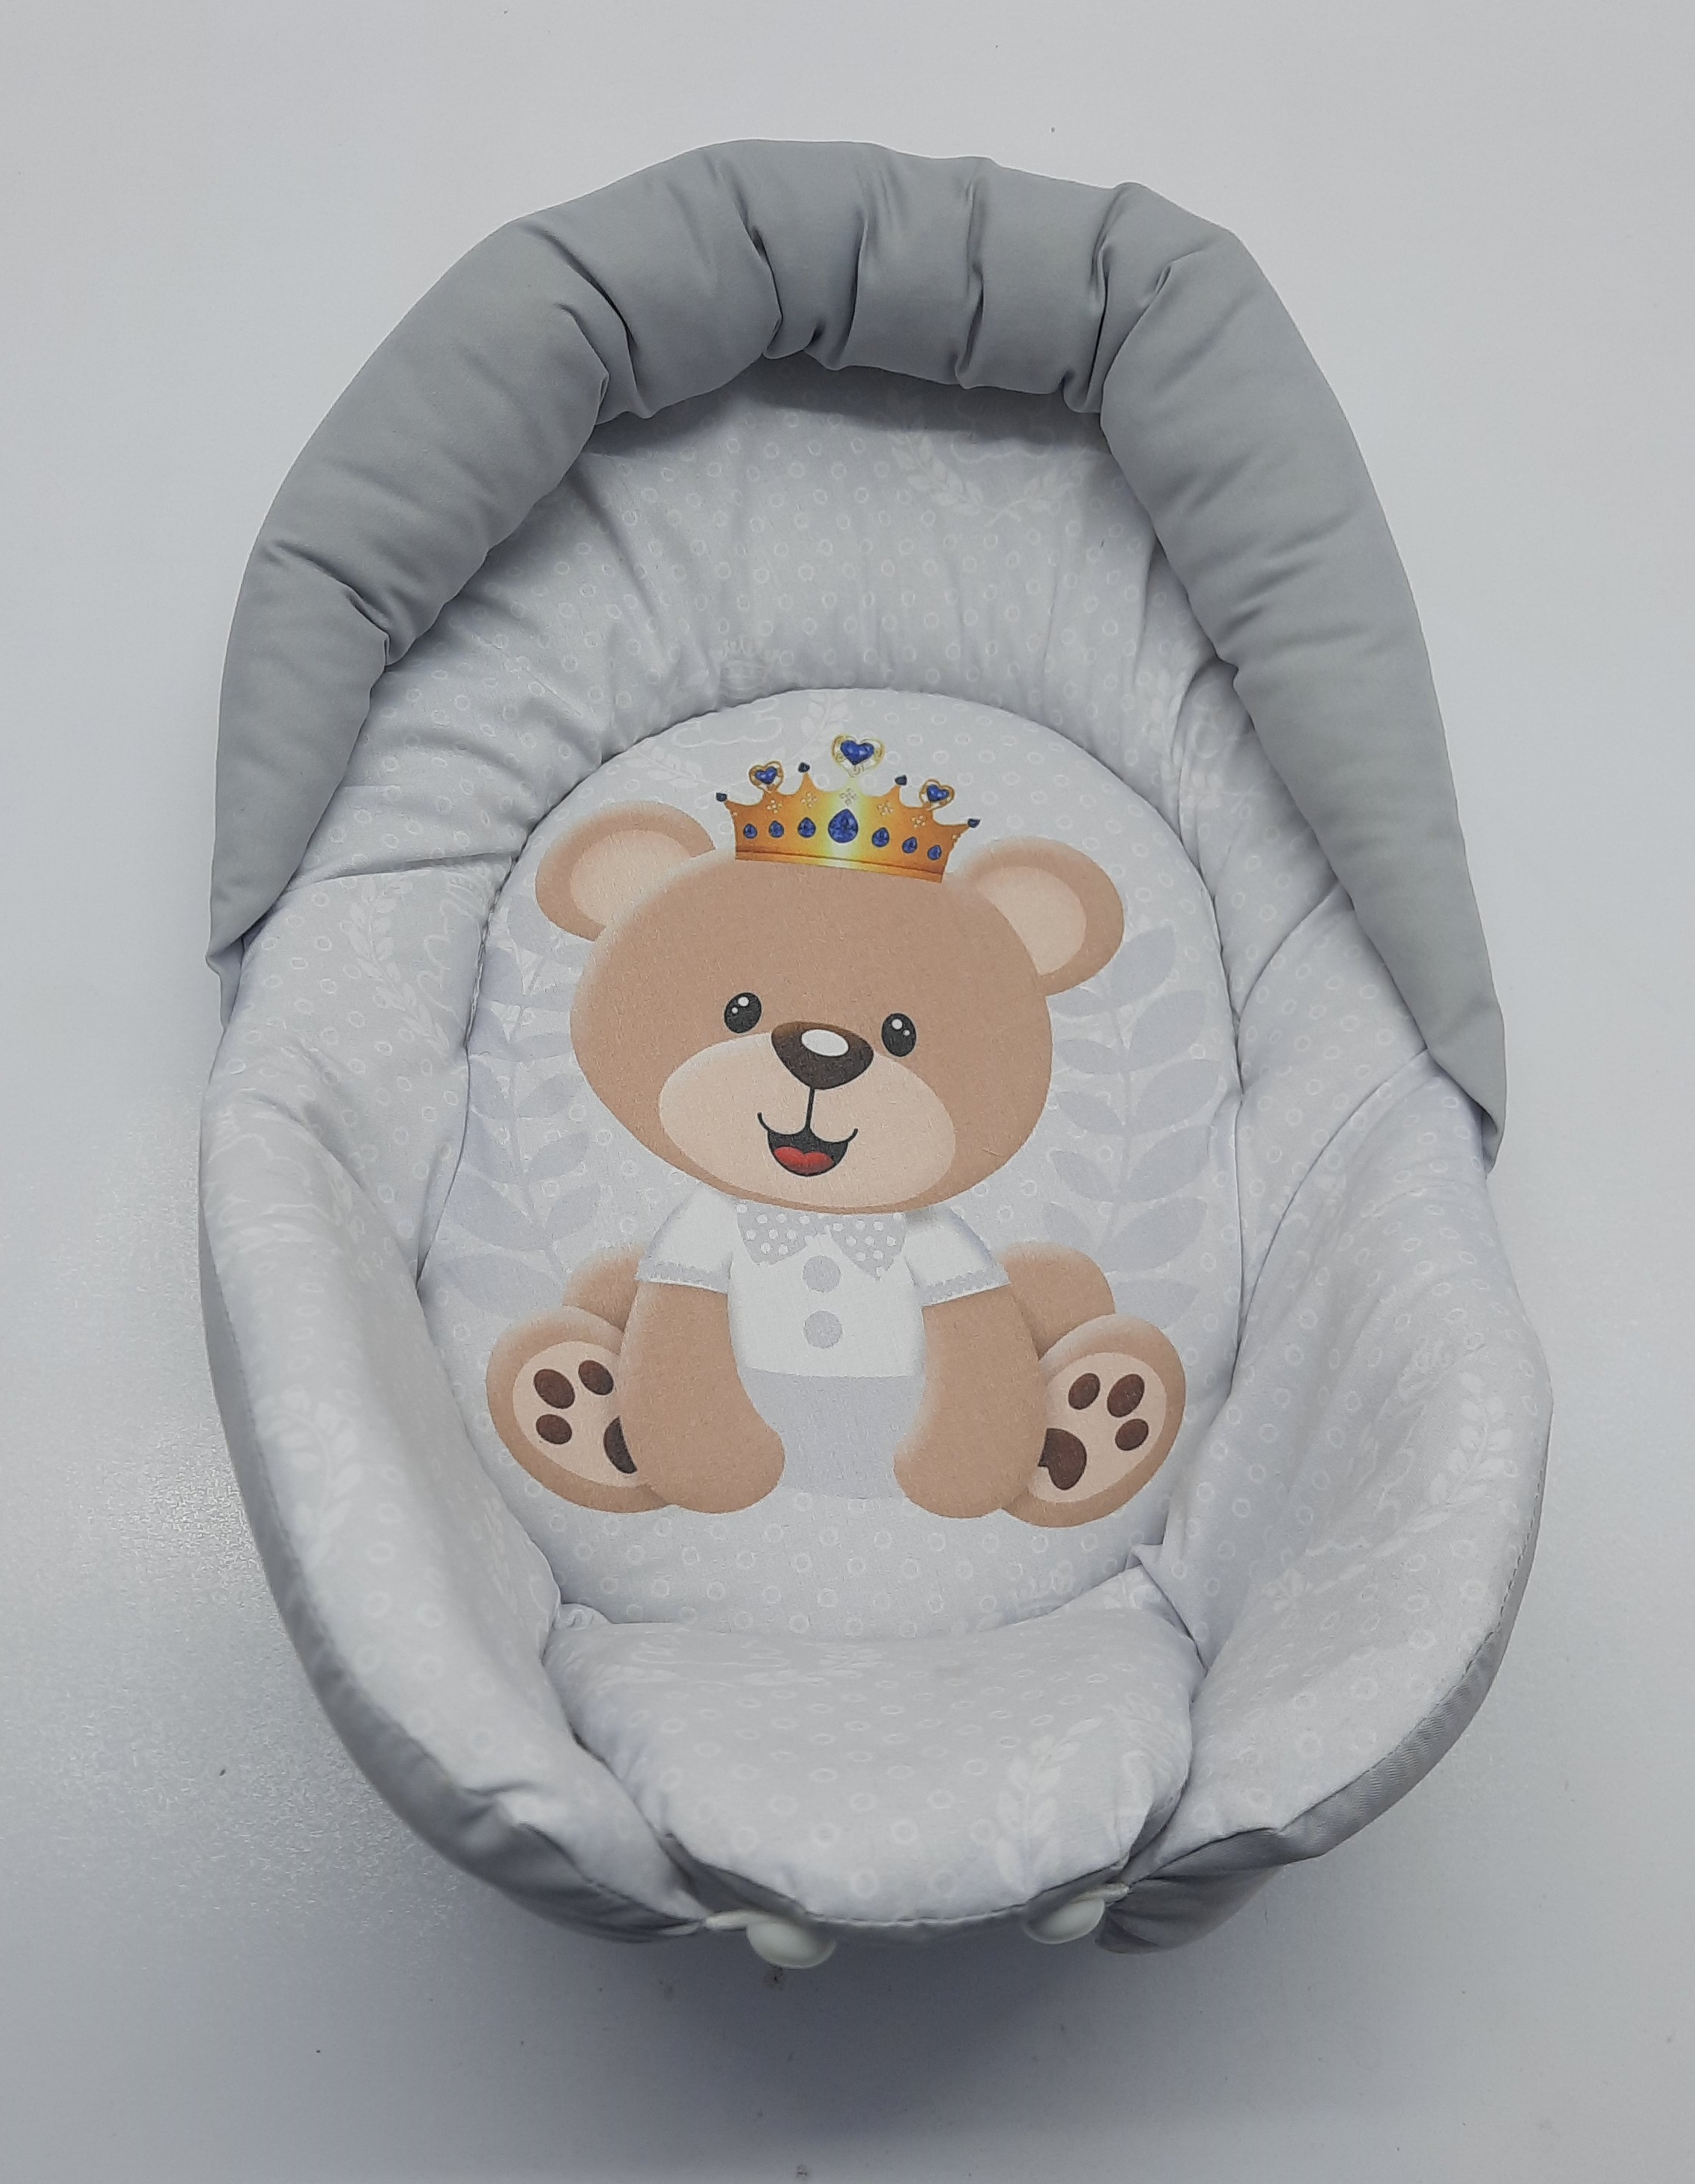 قنداق فرنگی سوئیسی نوزاد رافل رنگ طوسی طرح خرس